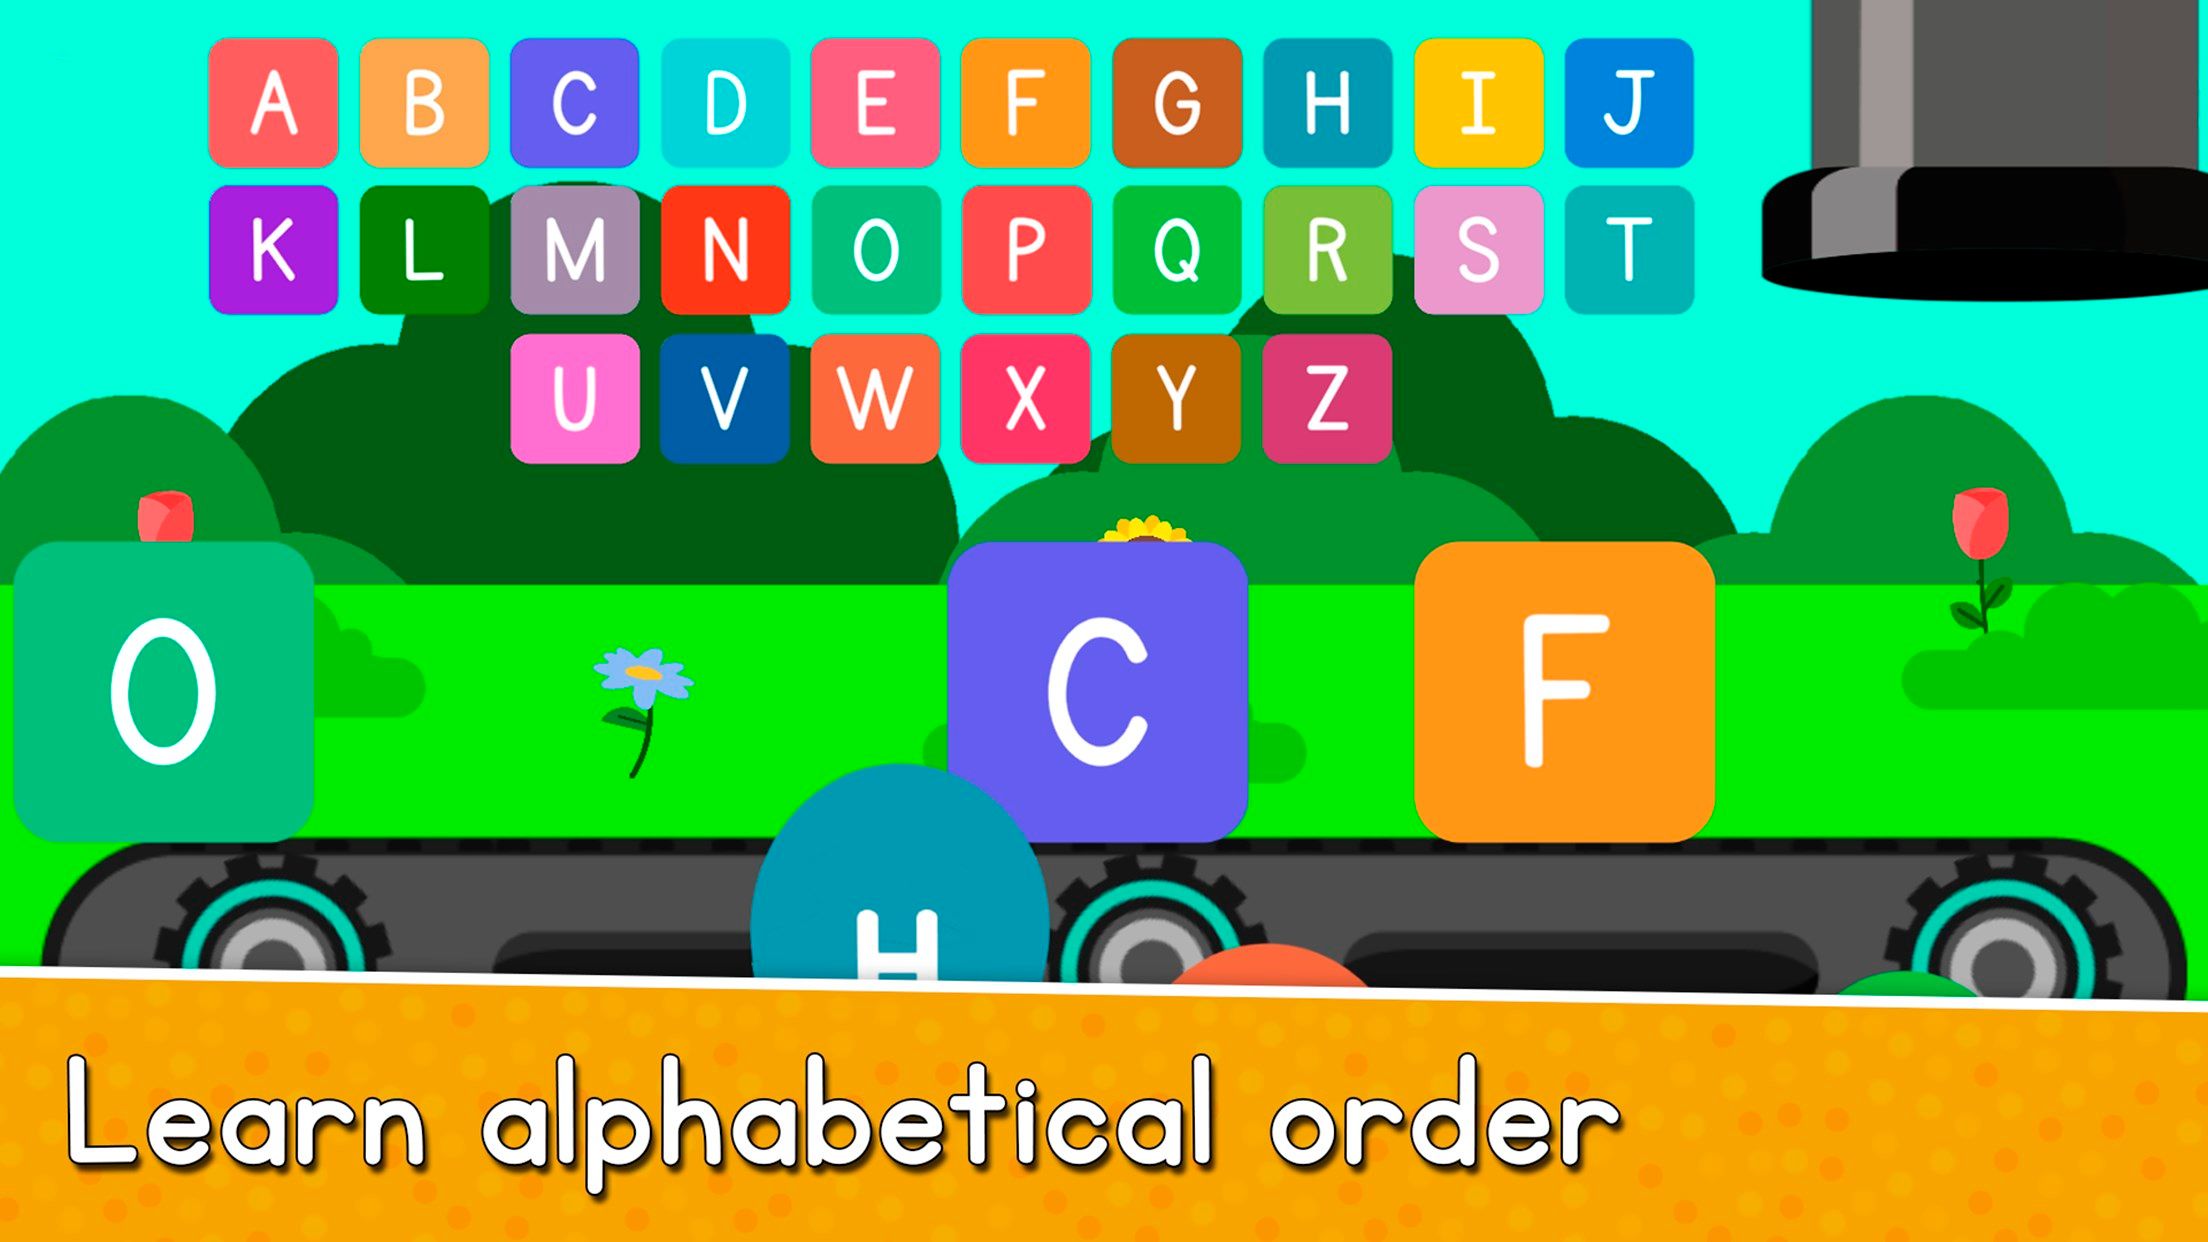 Learn alphabetical order